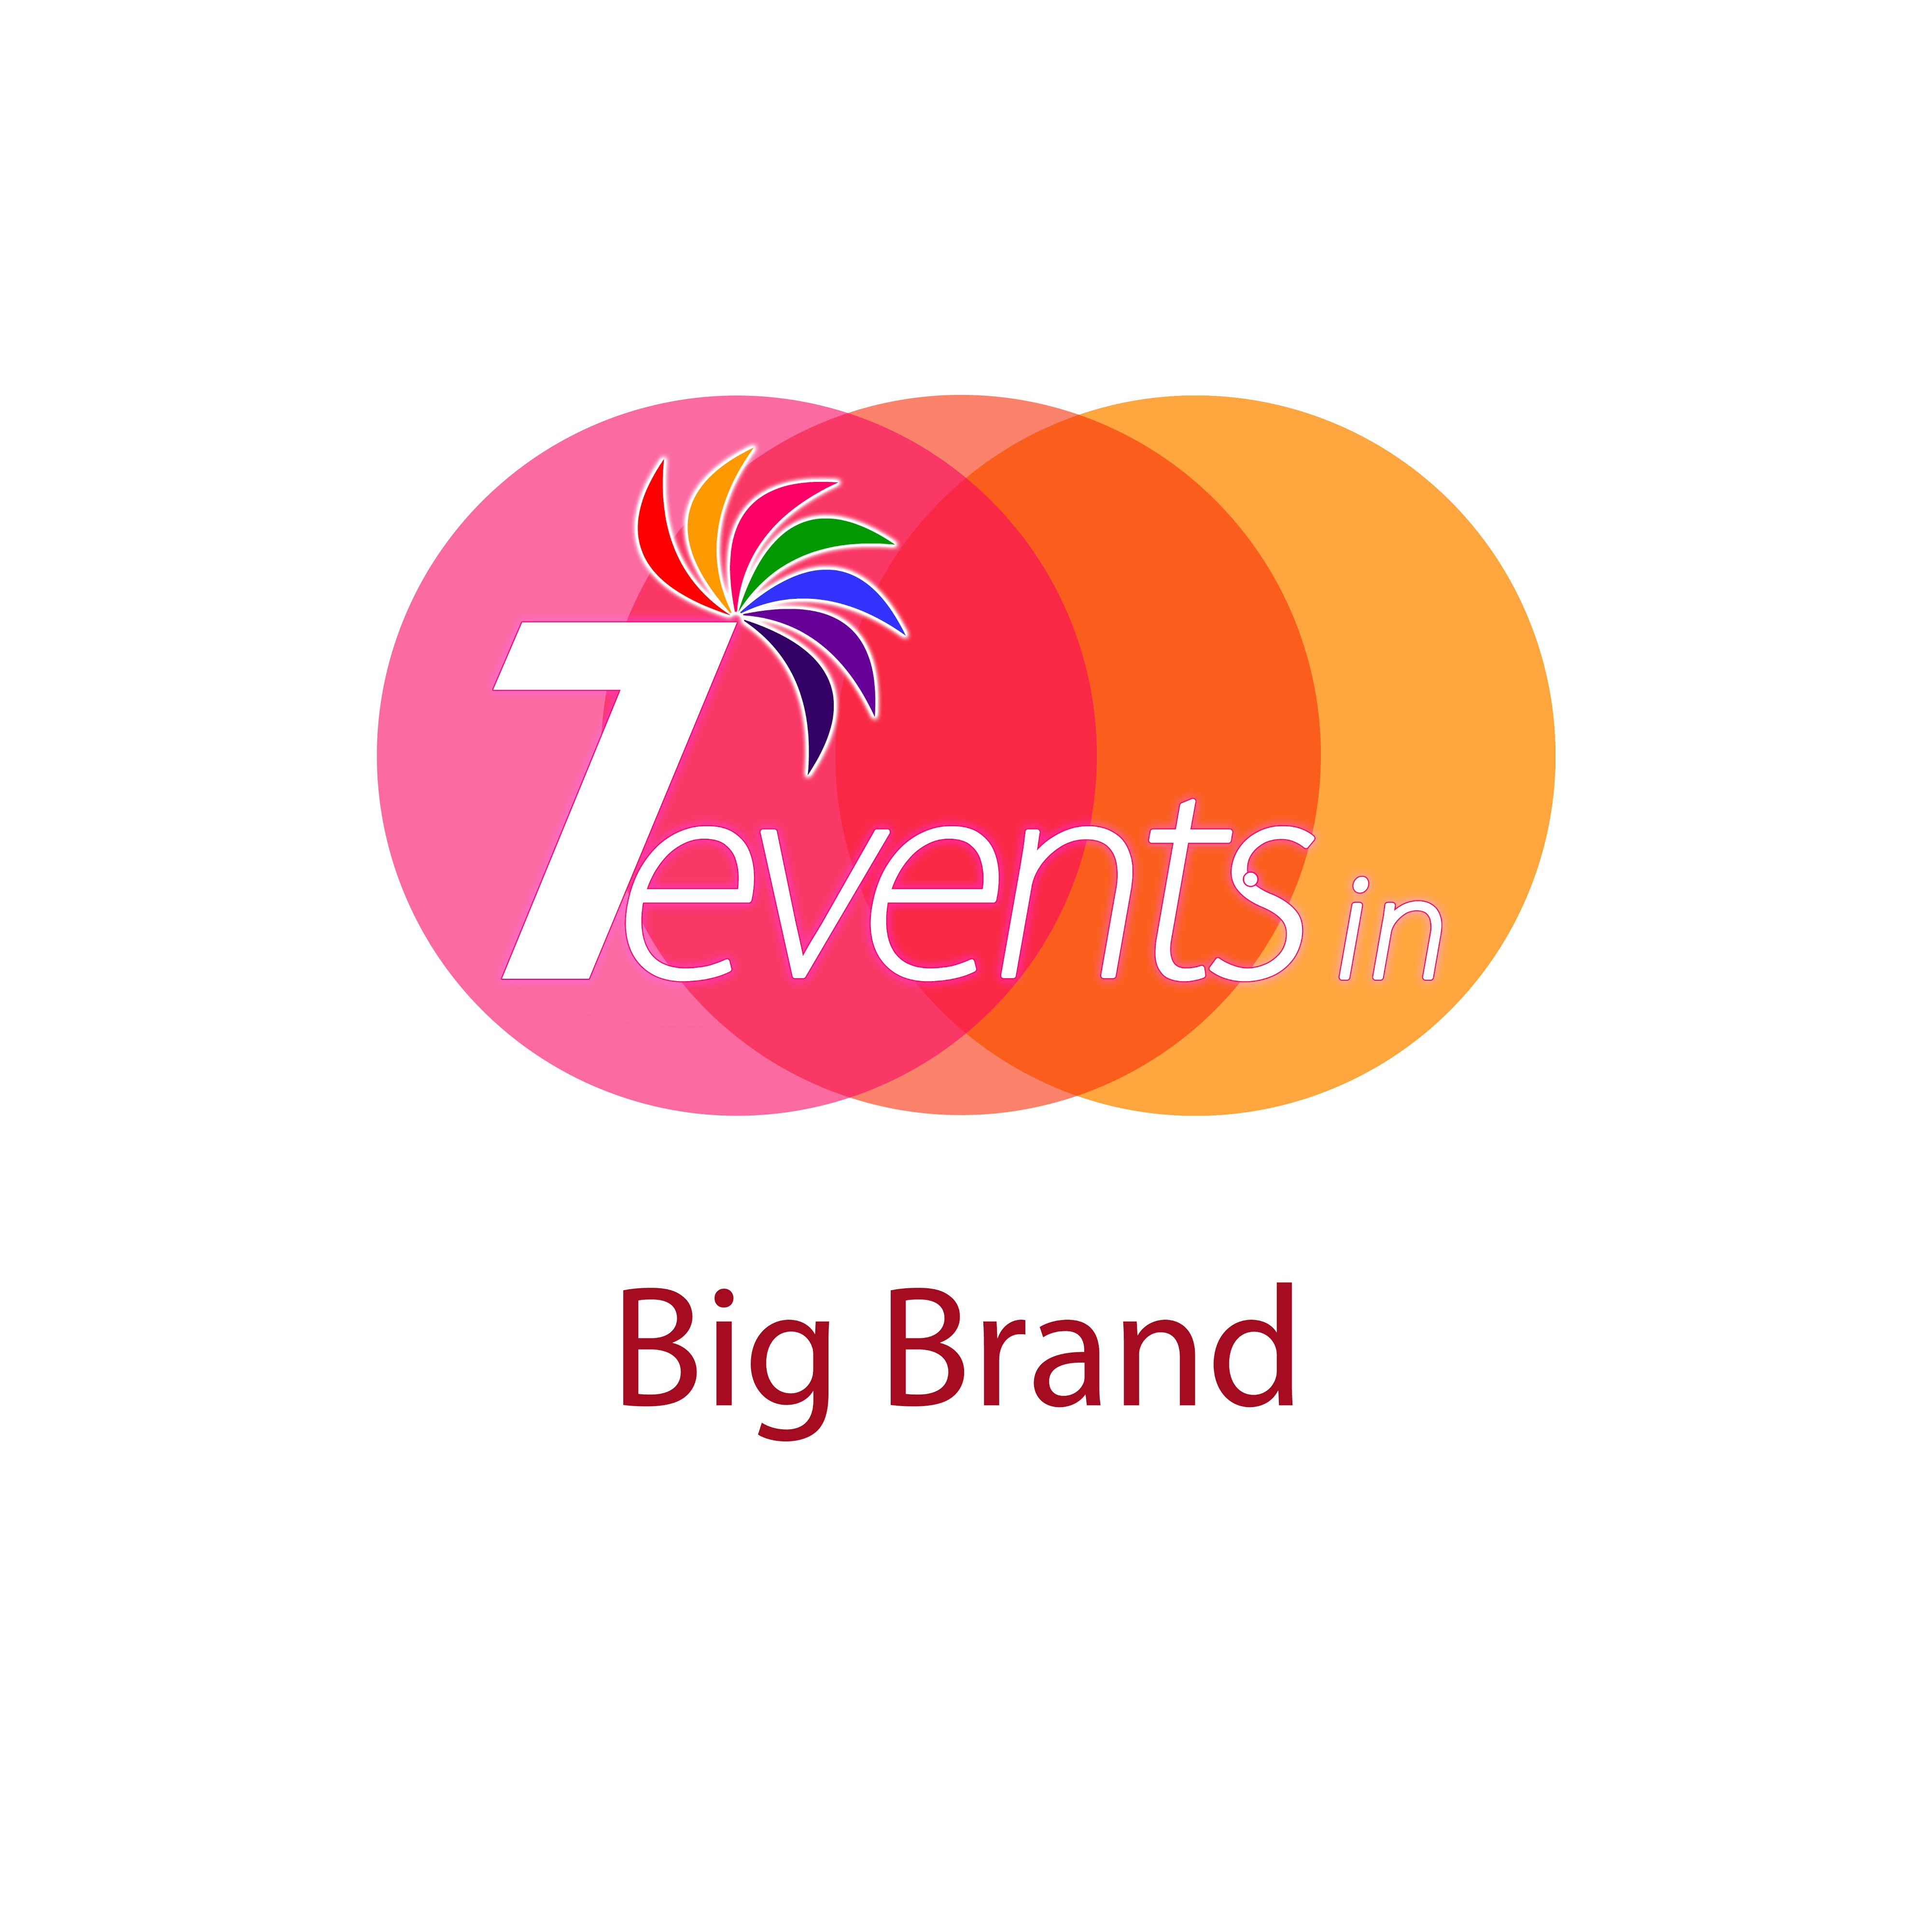 7events.in Event Management Studio logo